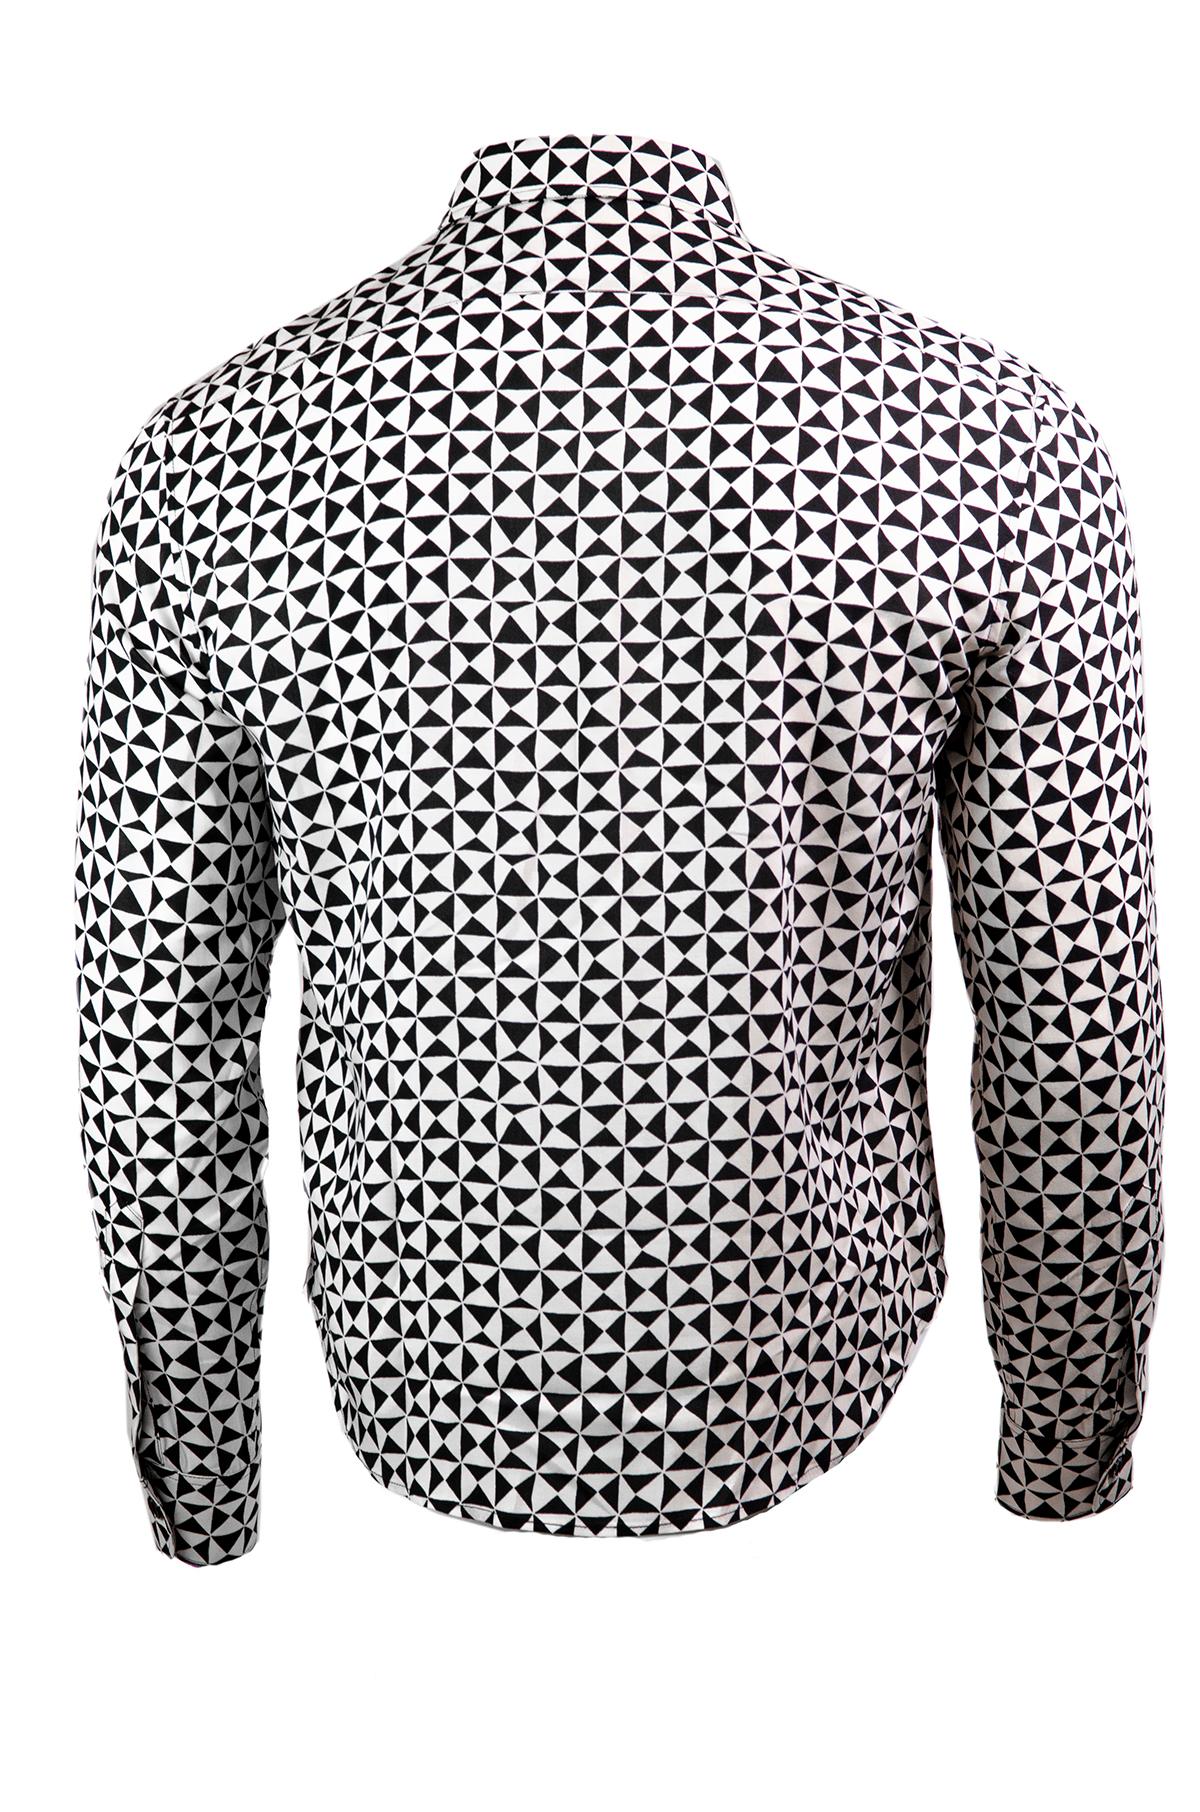 CELINE BY HEDI SLIMANE 70''s inspiriertes monochromes Hemd (Grau) im Angebot